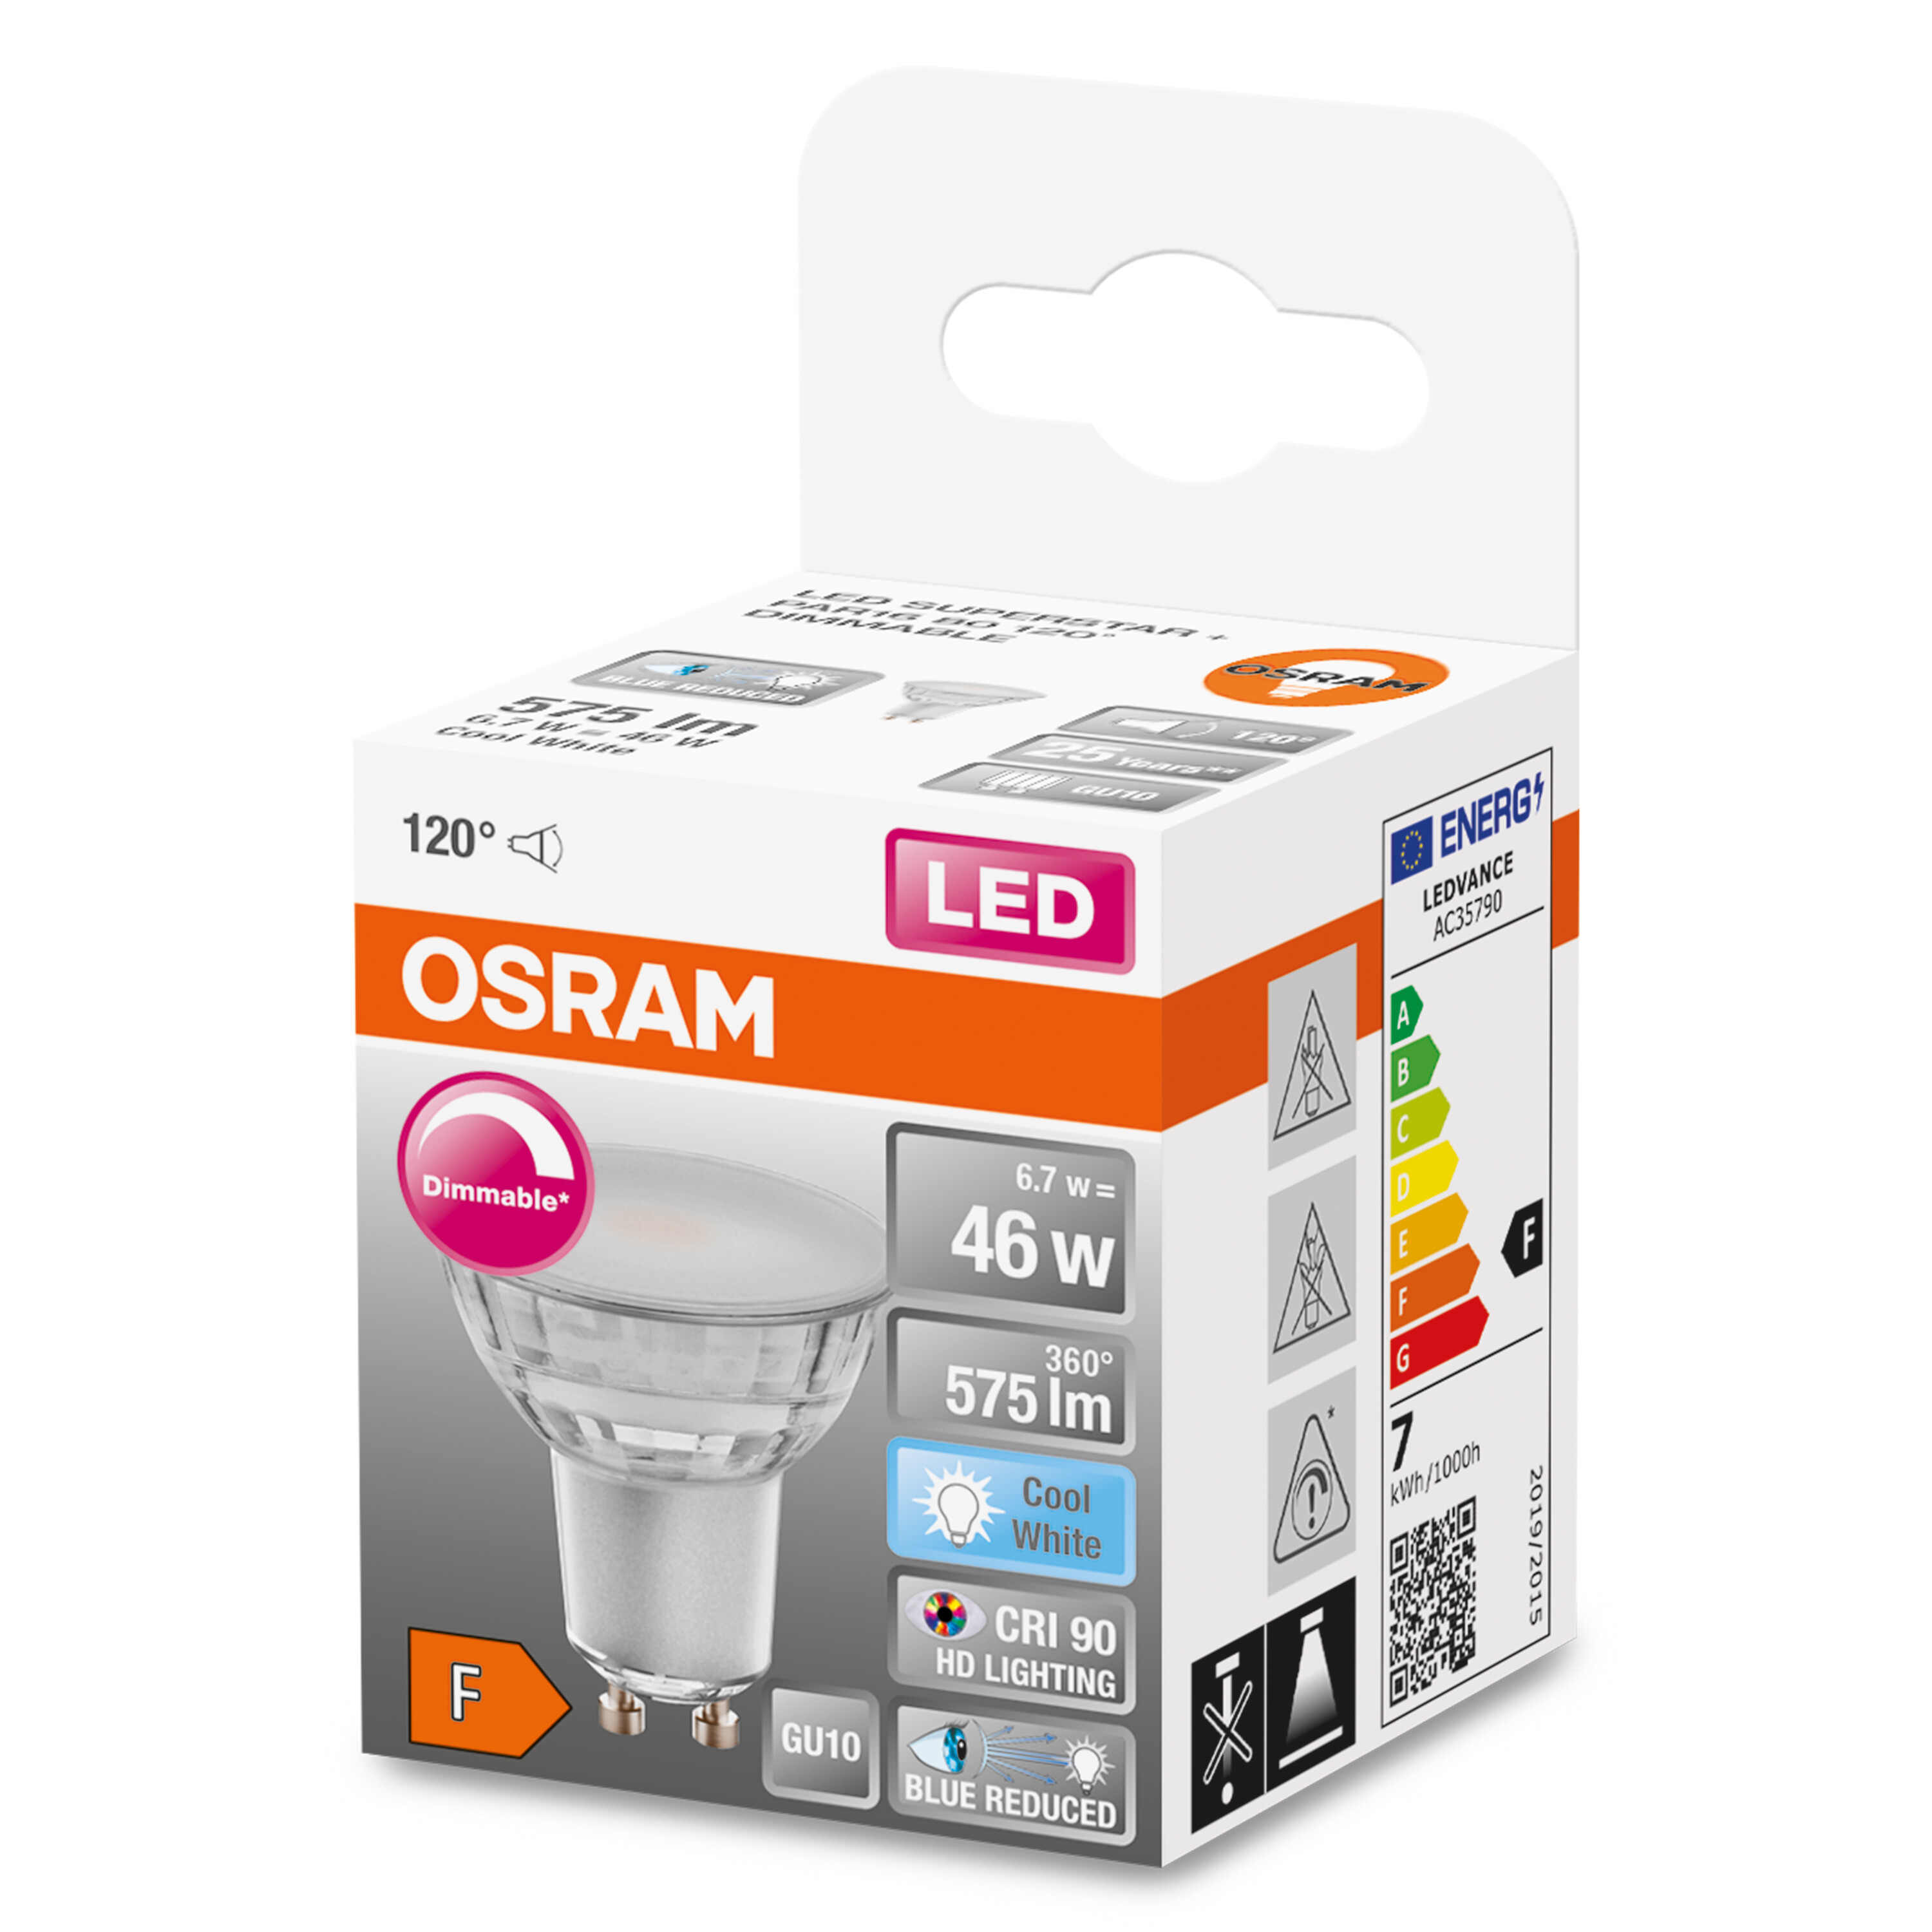 OSRAM  LED PAR16 REFLECTOR SUPERSTAR 575 PLUS Kaltweiß LED Reflektor-Lampe Lumen